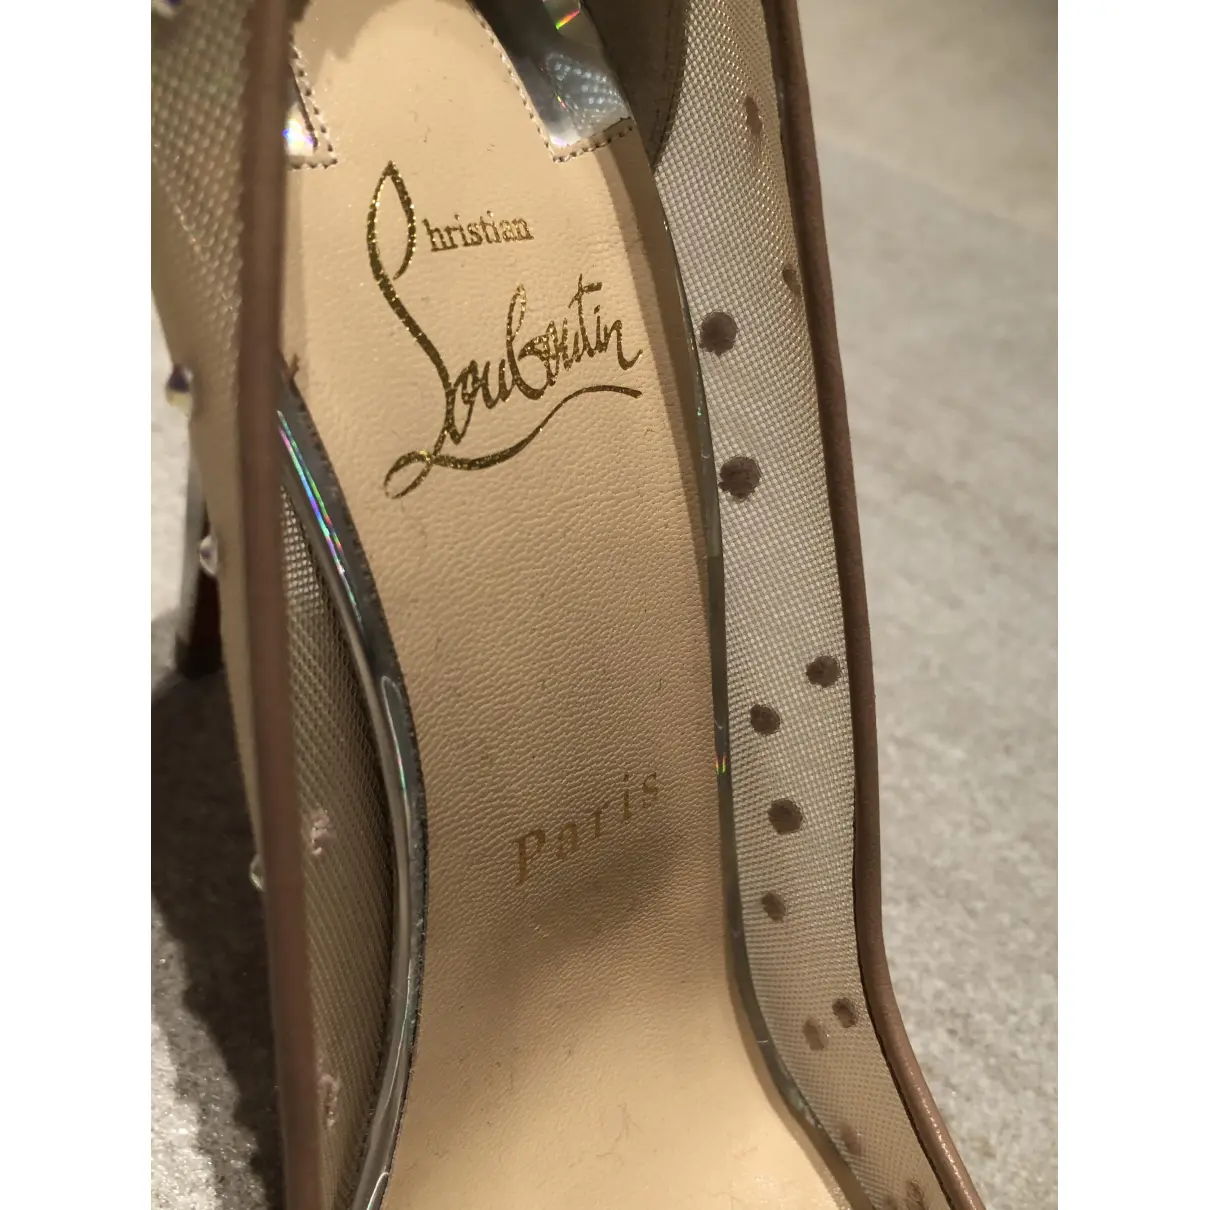 Degrastrass leather heels Christian Louboutin